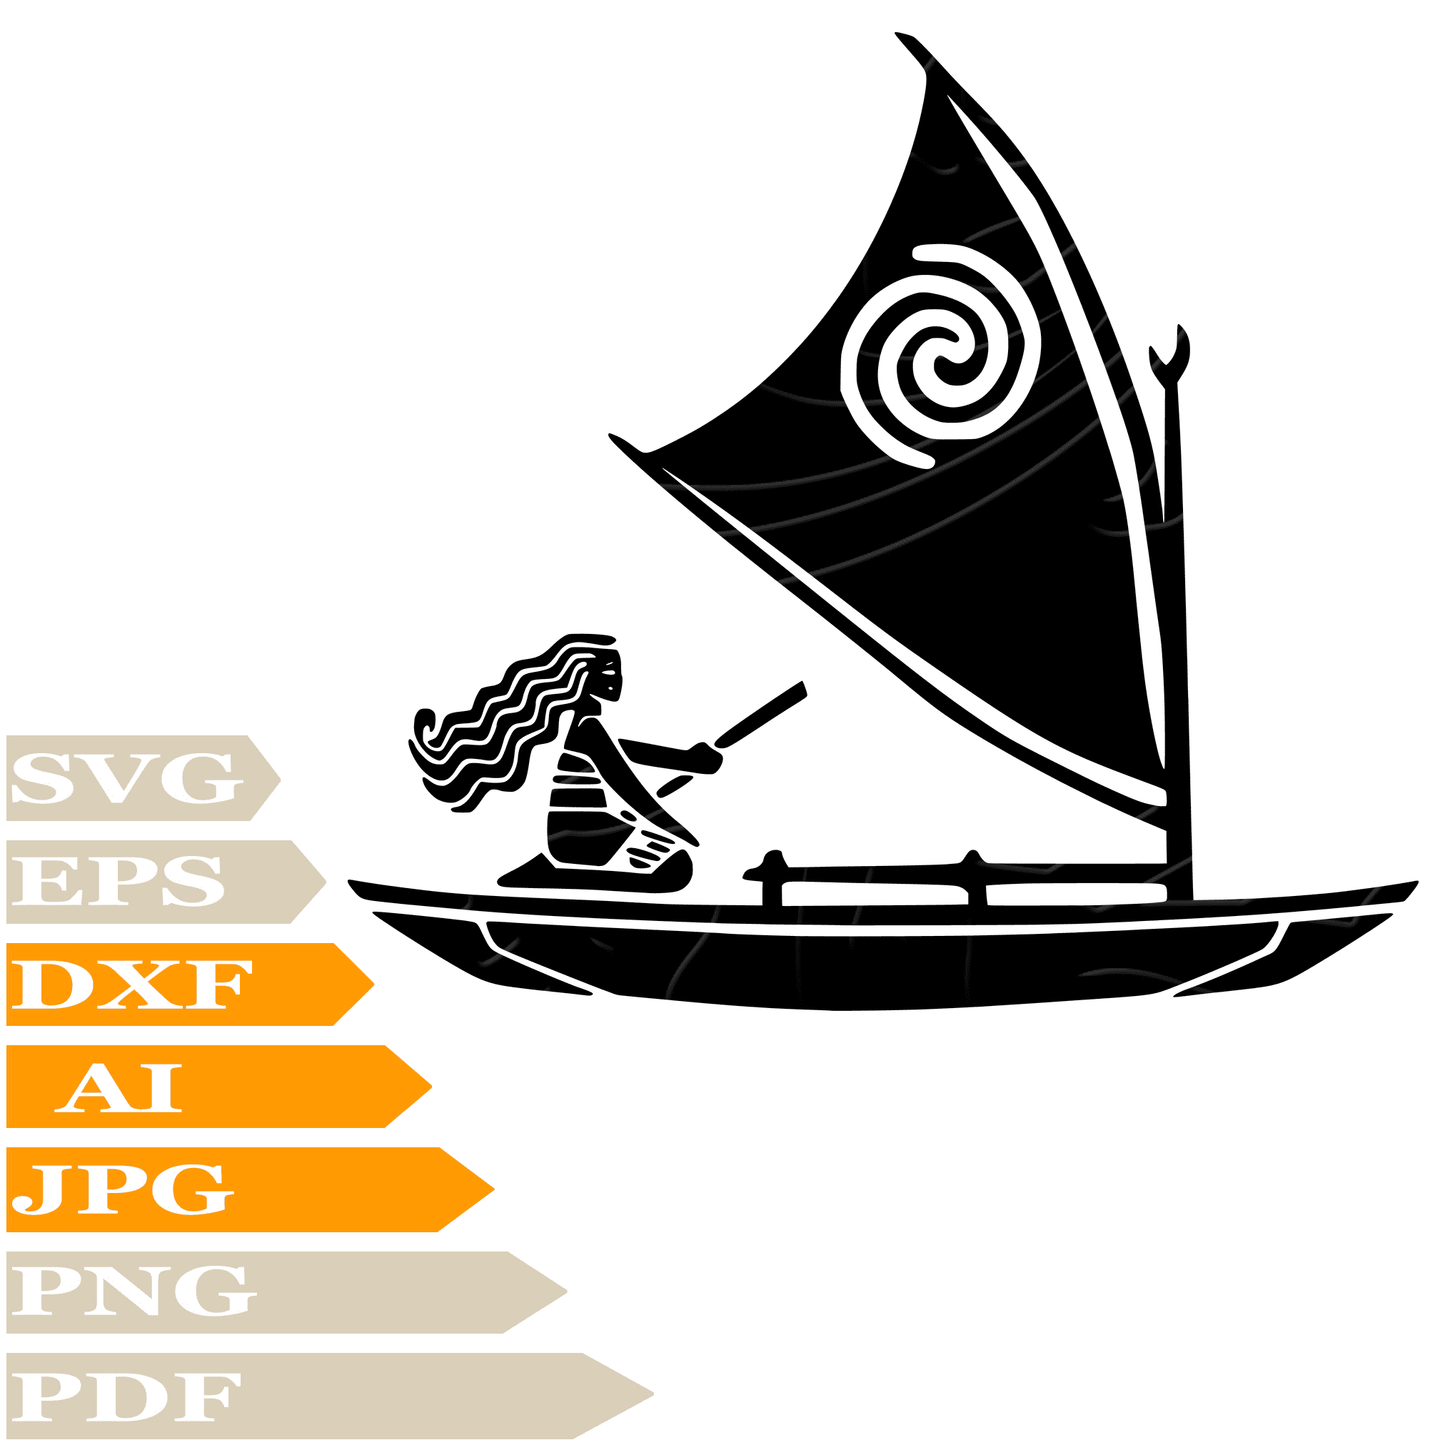 sofvintage-Moana SVG-Princess SVG Design-Princess Moana SVG File-MoanaDigital Vector Download-Moana PNG-Moana For Cricut-Moana Clip art-Moana Image Cut-Moana T-Shirt-Moana Wall Sticker-Moana Printable-Moana Silhouette